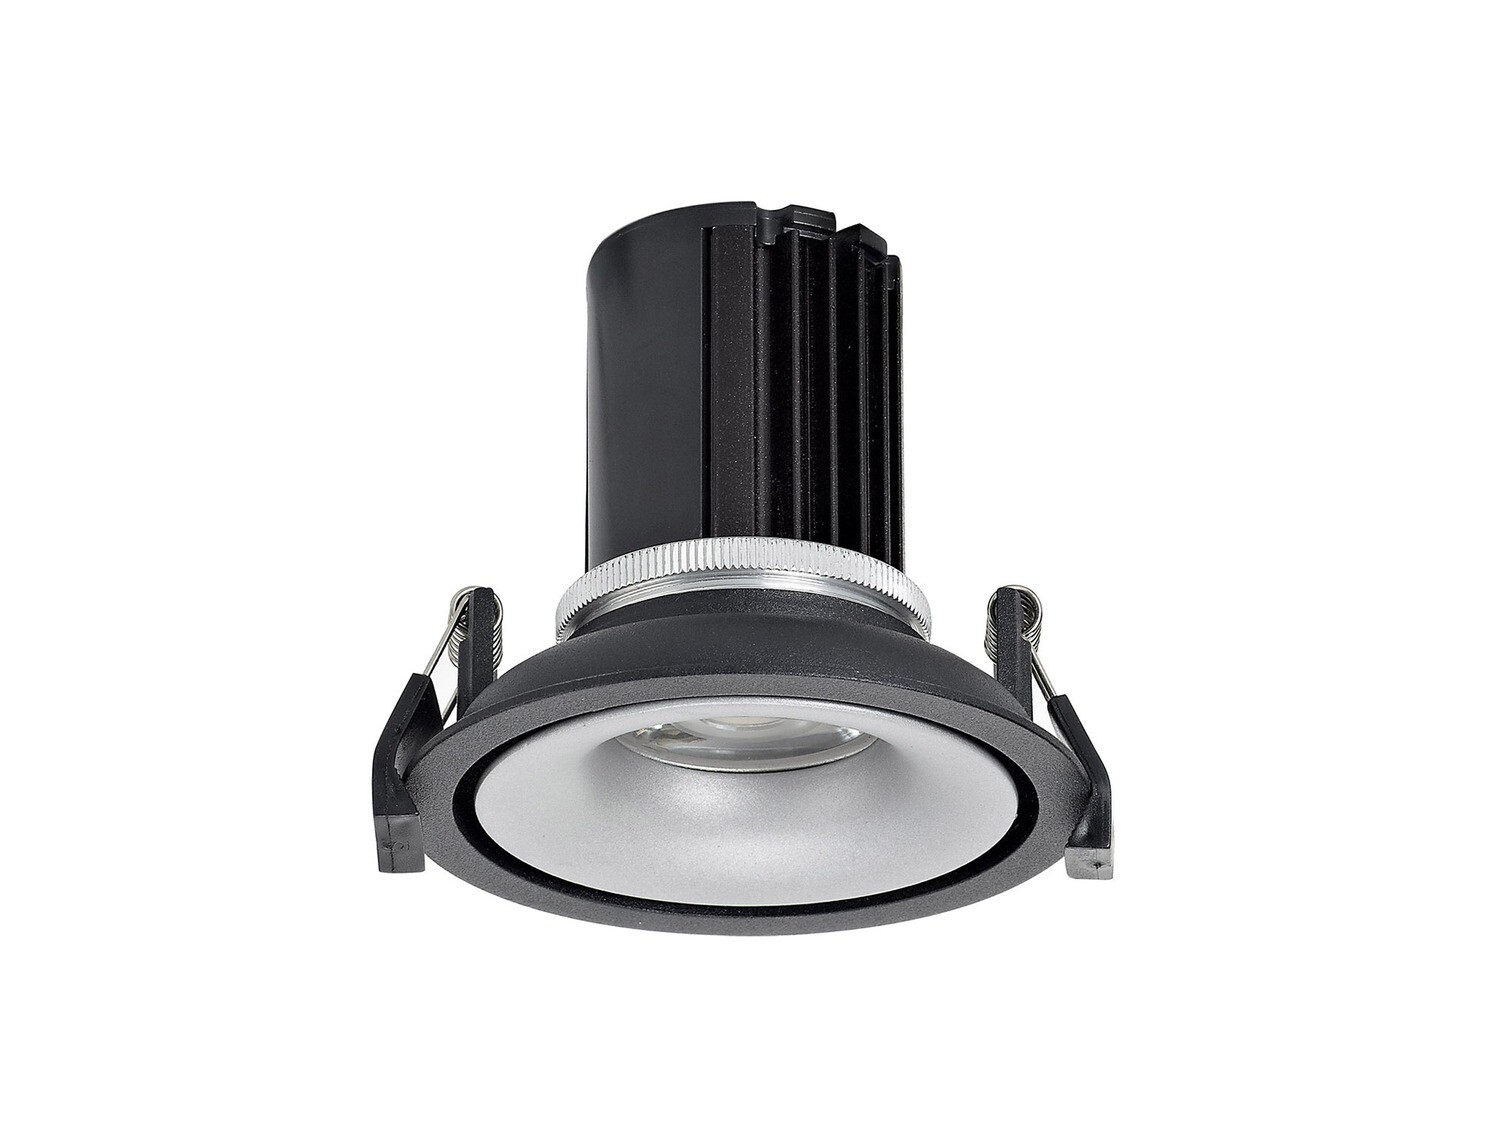 BOLOR LED Spot-light 10W Black/Silver